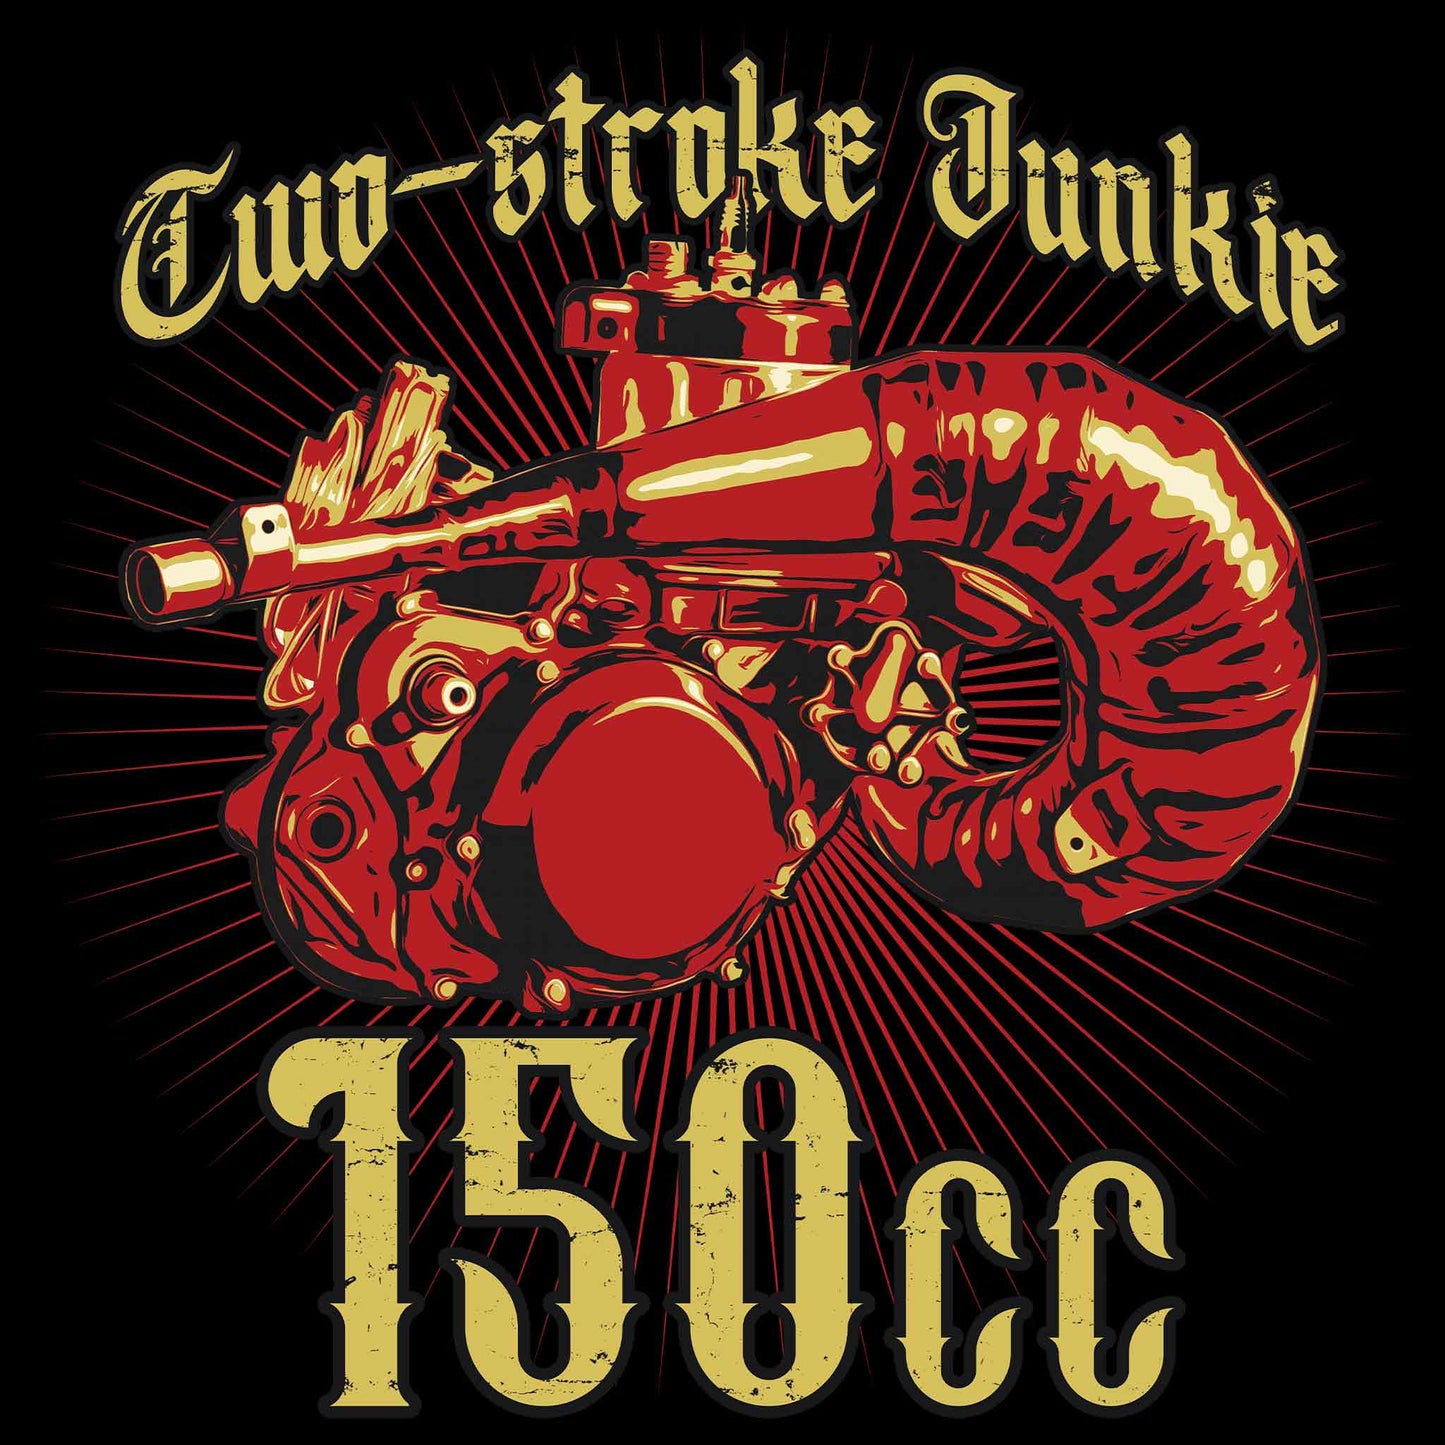 Two-Stroke Junkie 150cc T-Shirt